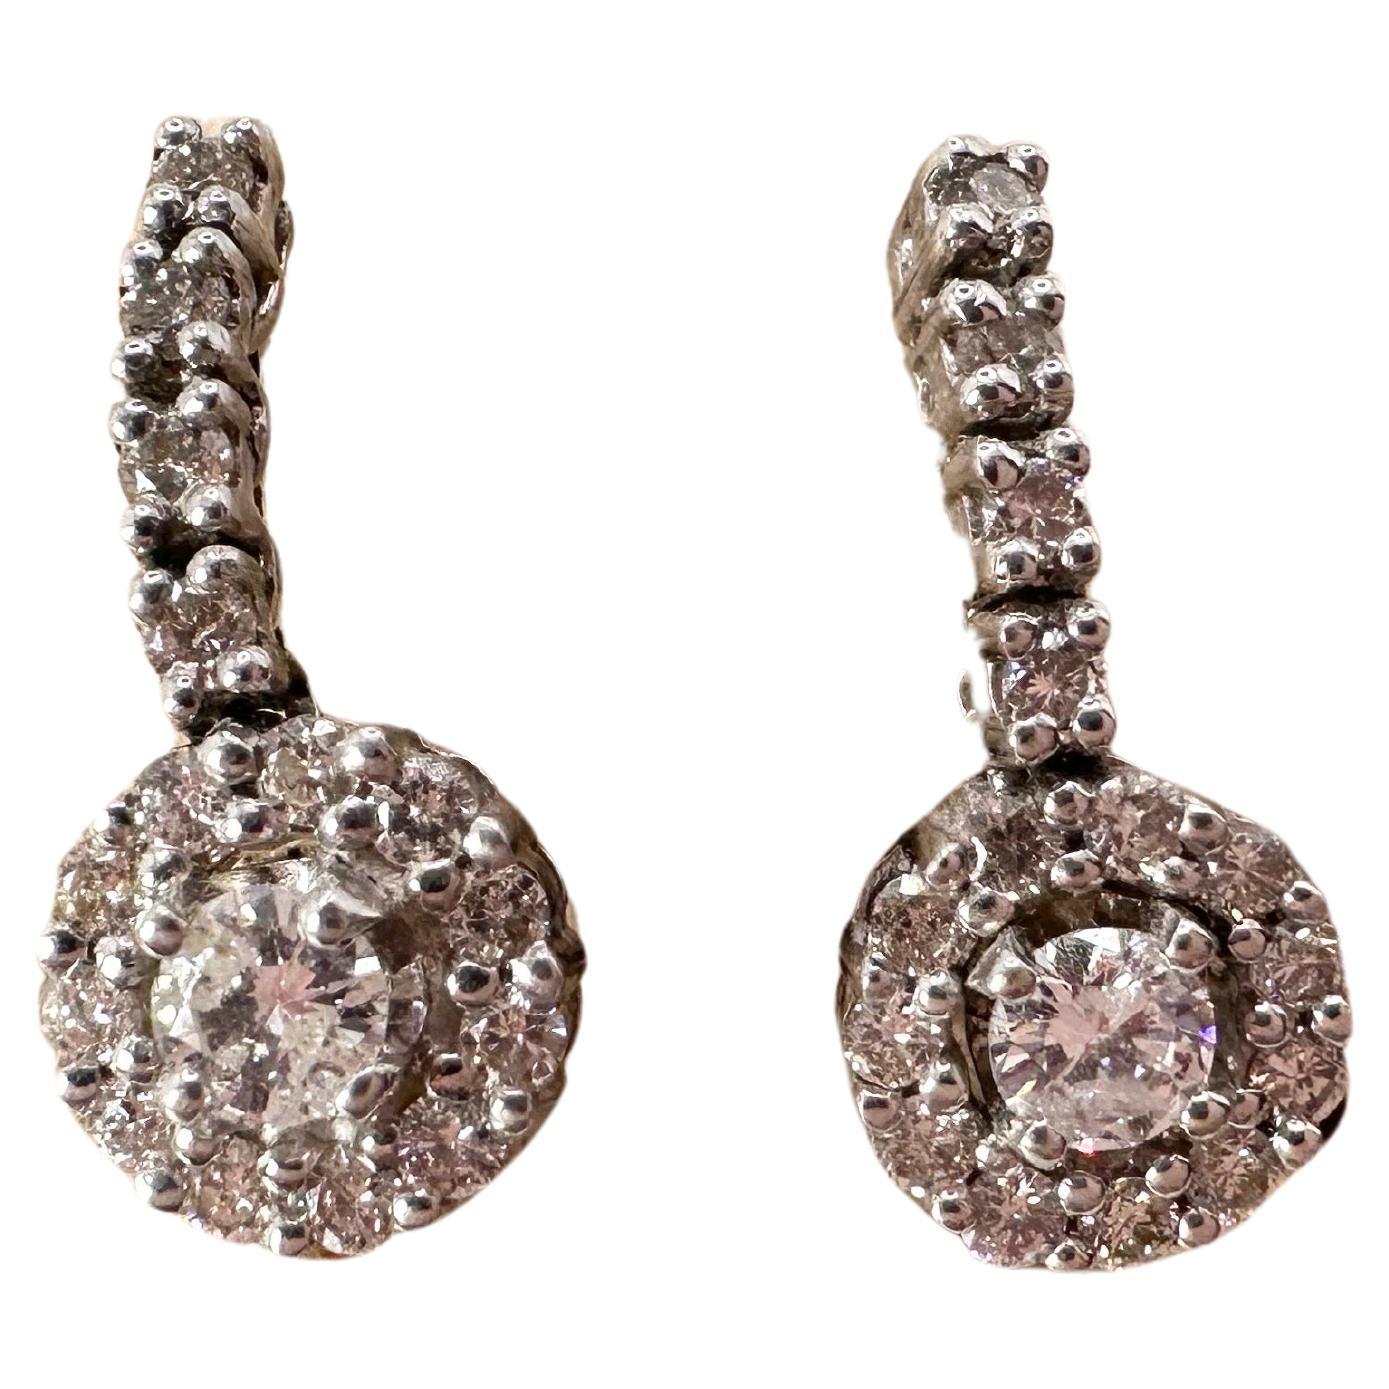 Elegant Diamond Earrings 1.07 Carats 14 Karat White Gold on Sale! For Sale